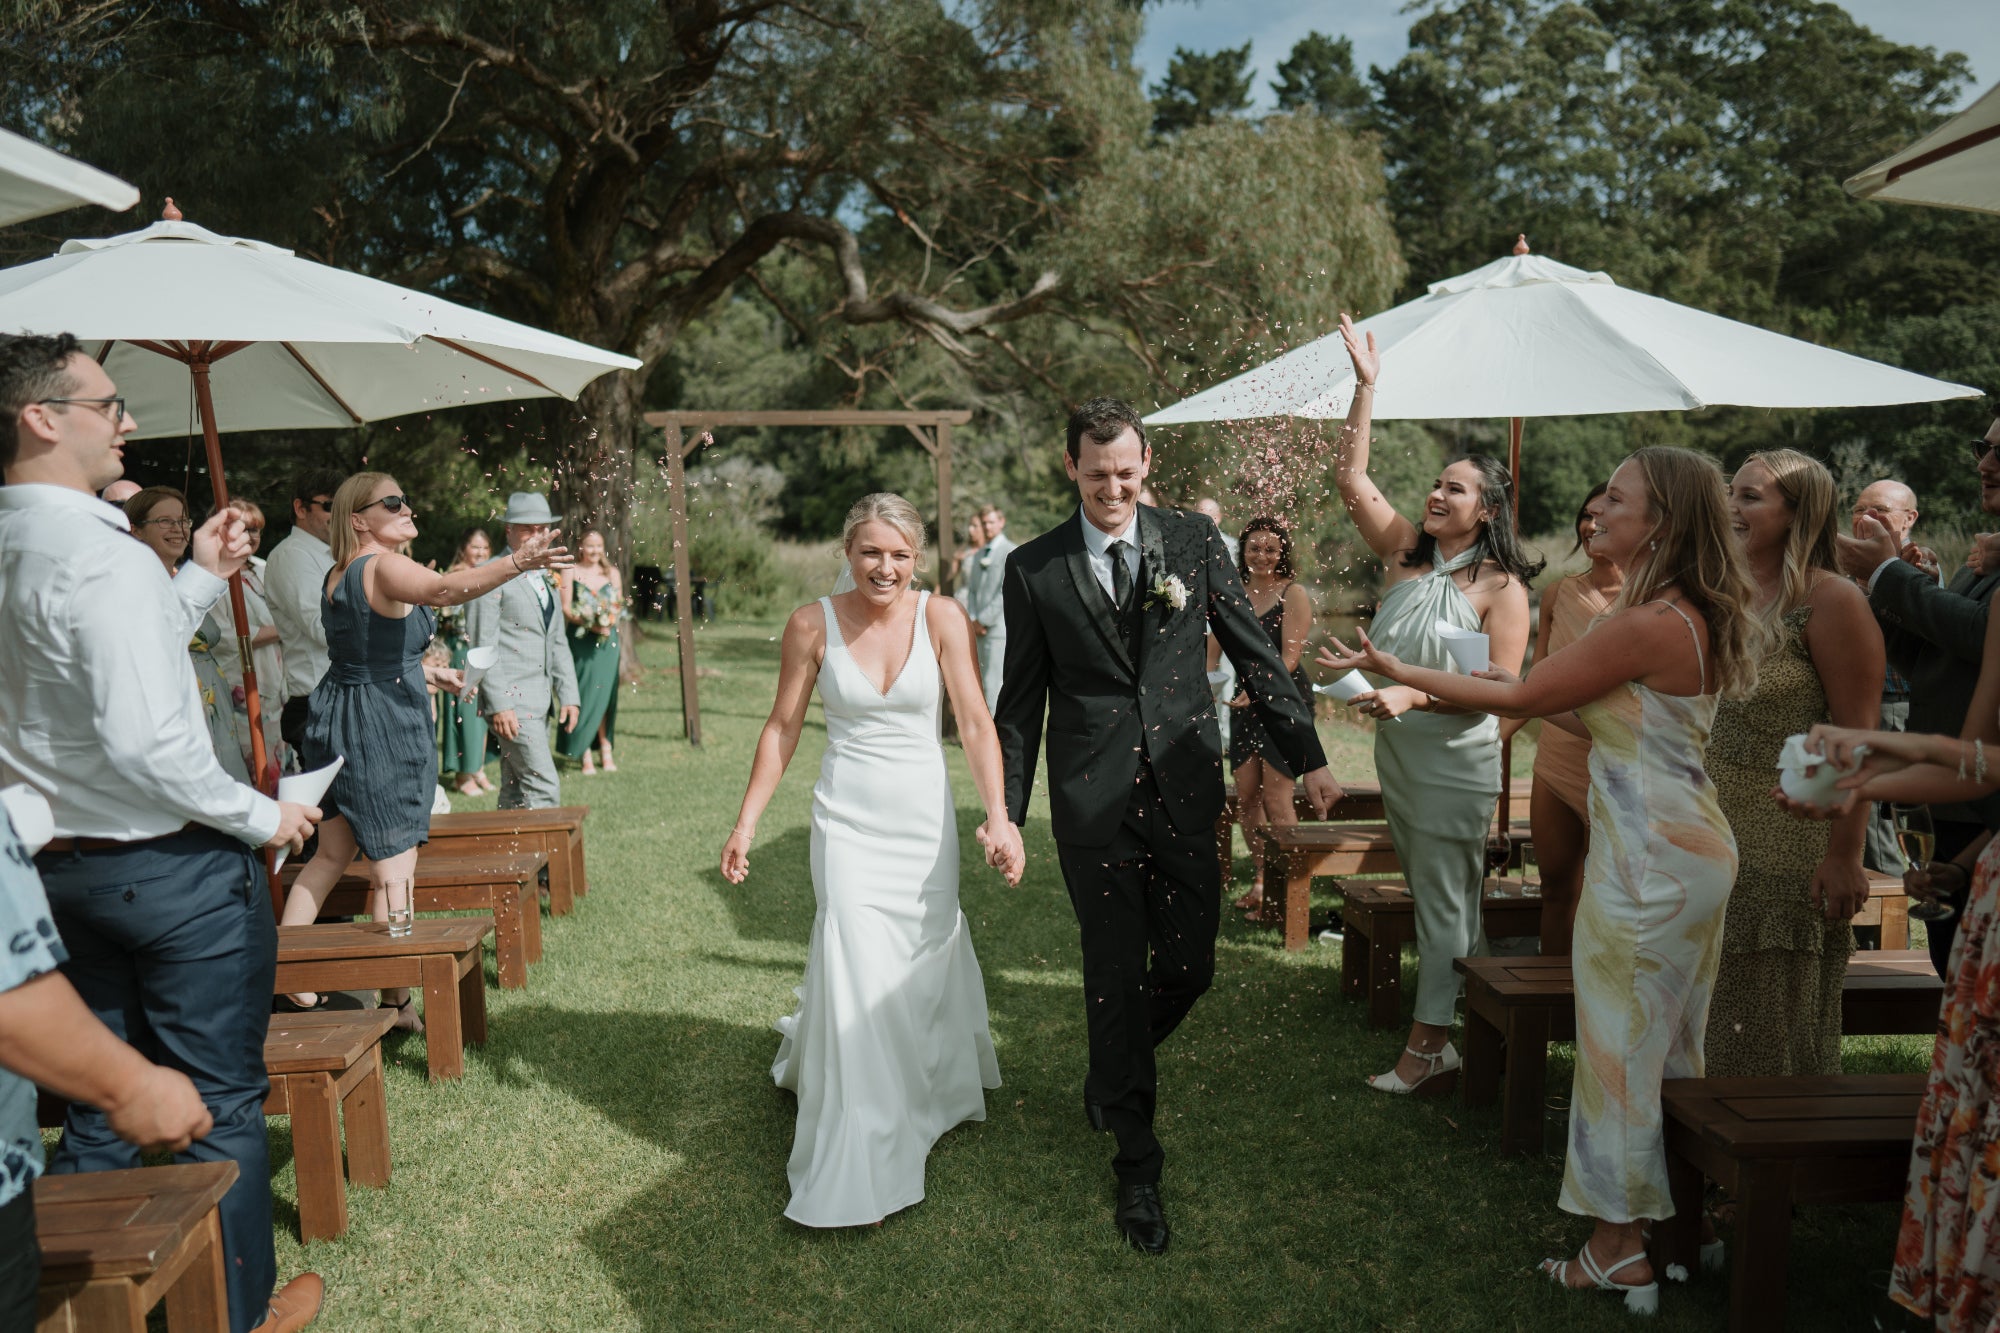 Mandy and Matt's wedding | Tawharanui Lodge | The Paper Gazelle